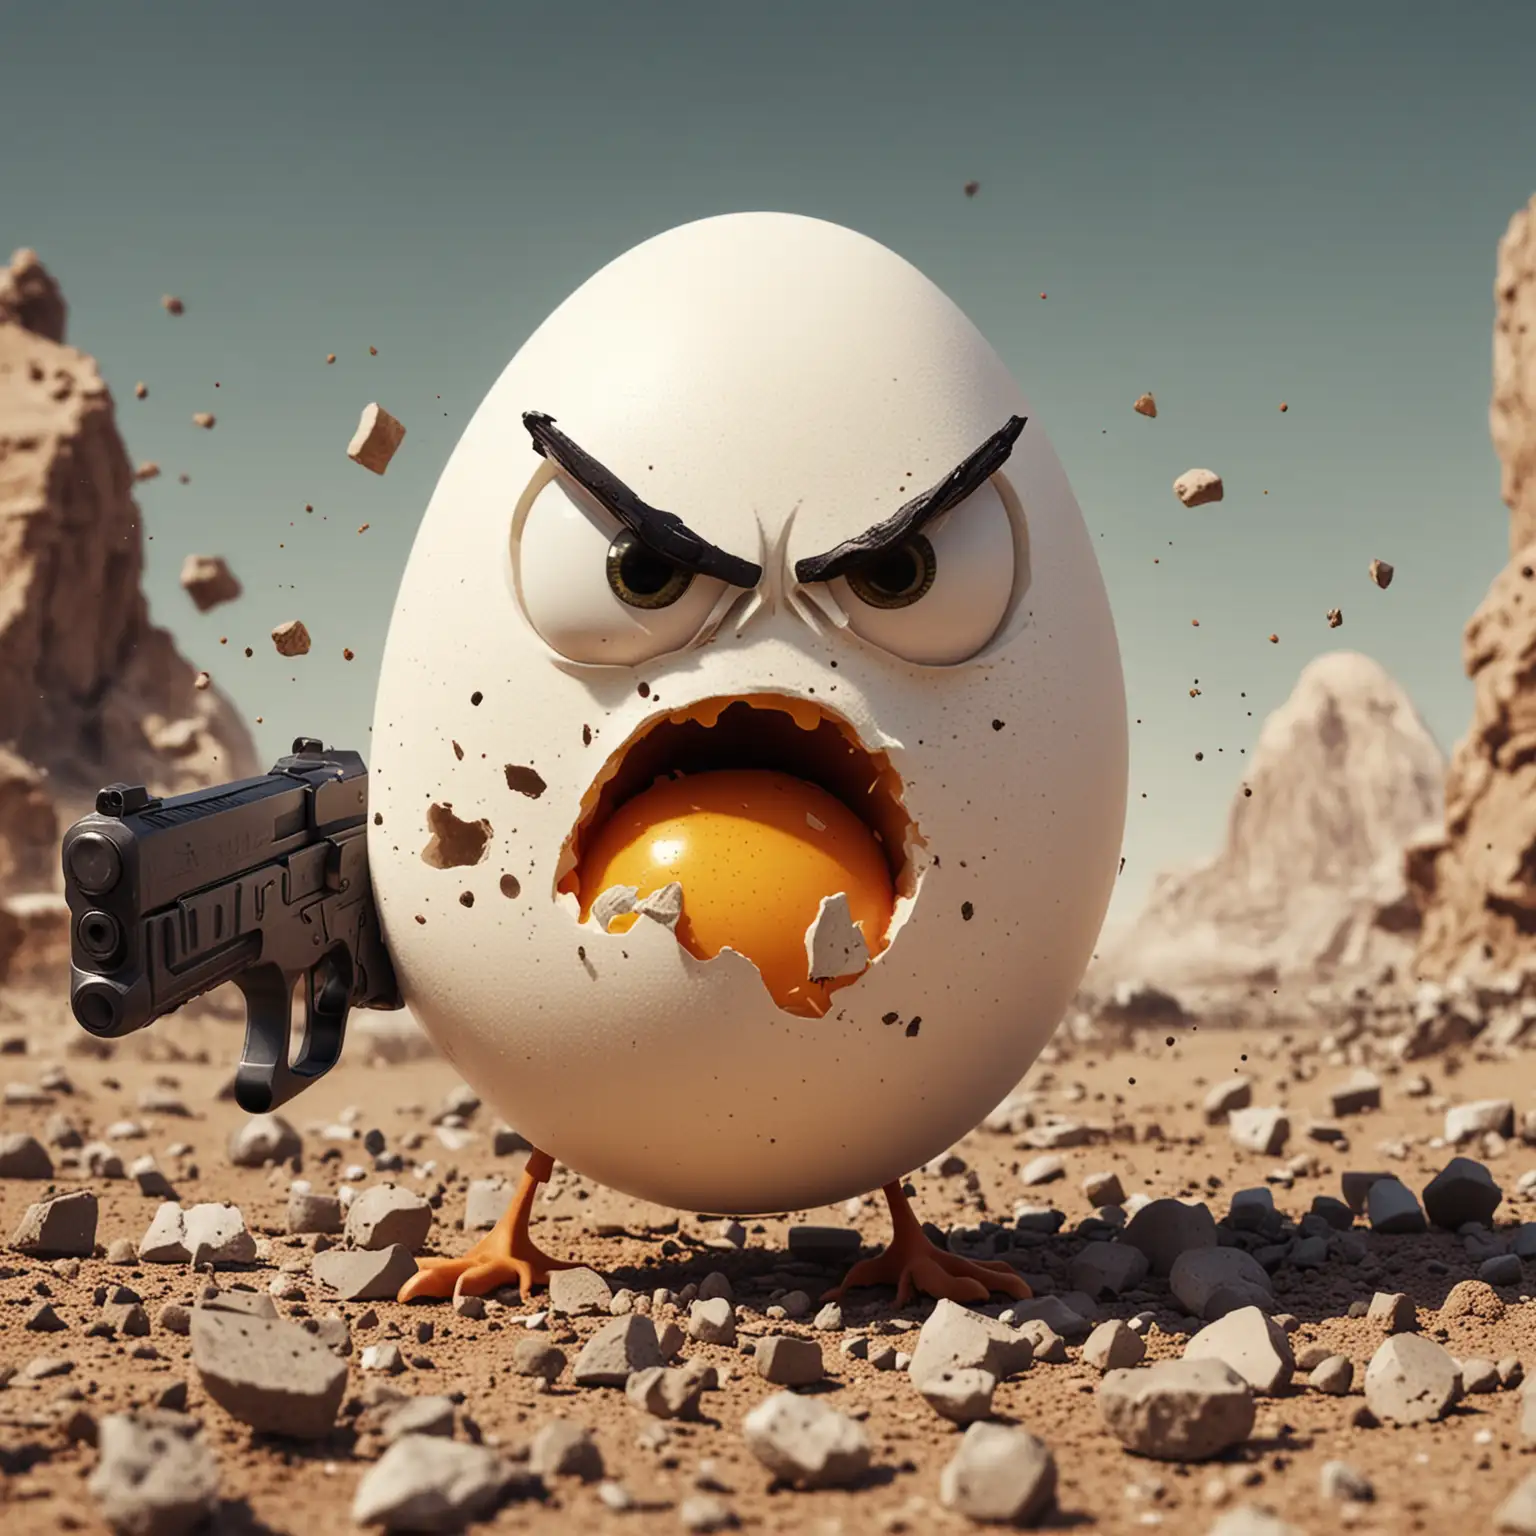 Cartoon Egg Wreaks Havoc with Guns